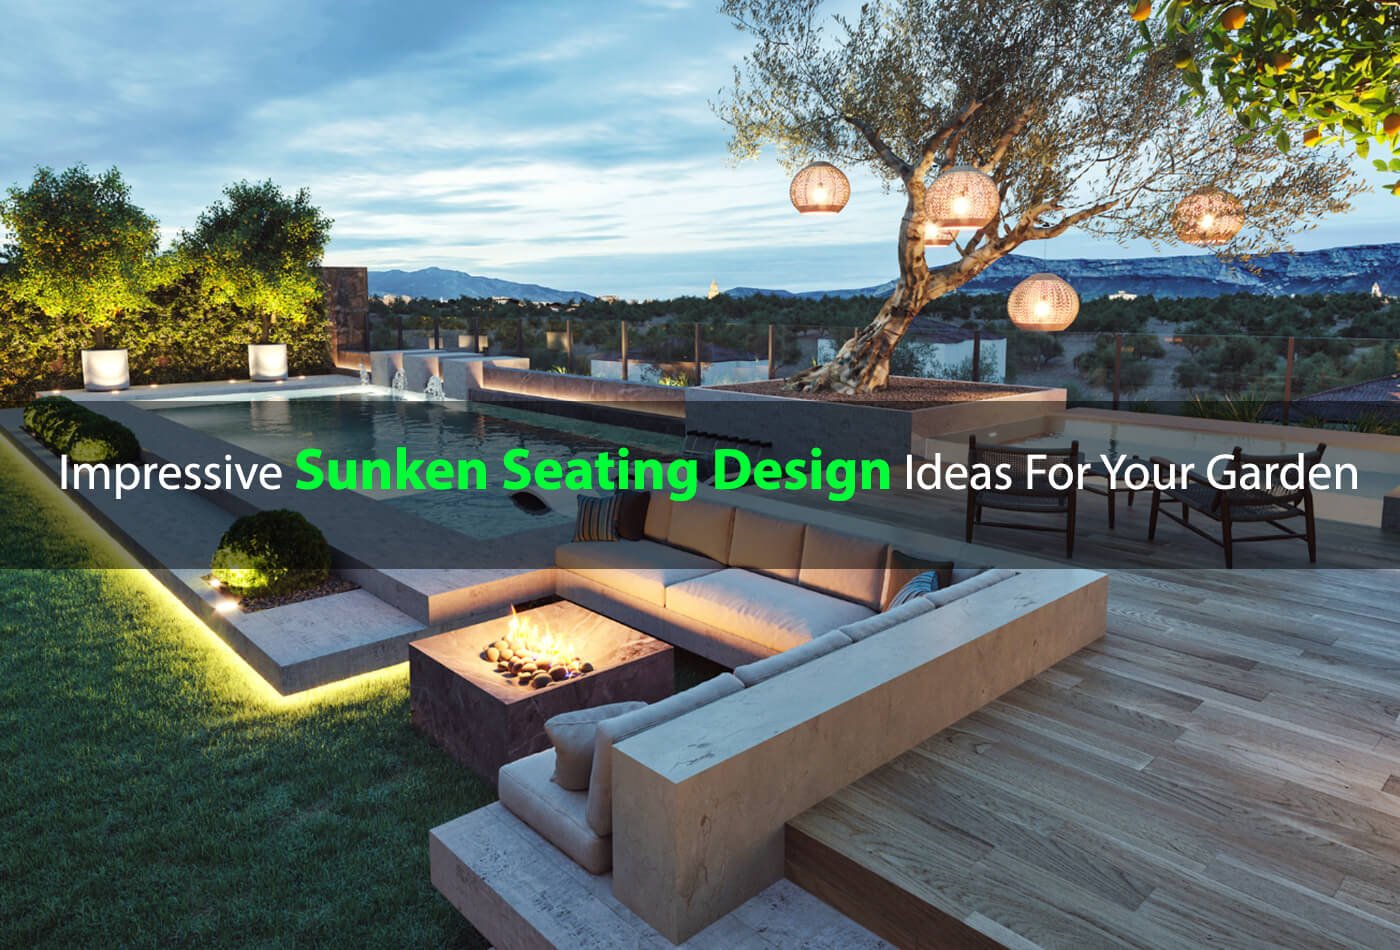 Impressive Sunken Garden Seating Design Ideas - Expert Tips